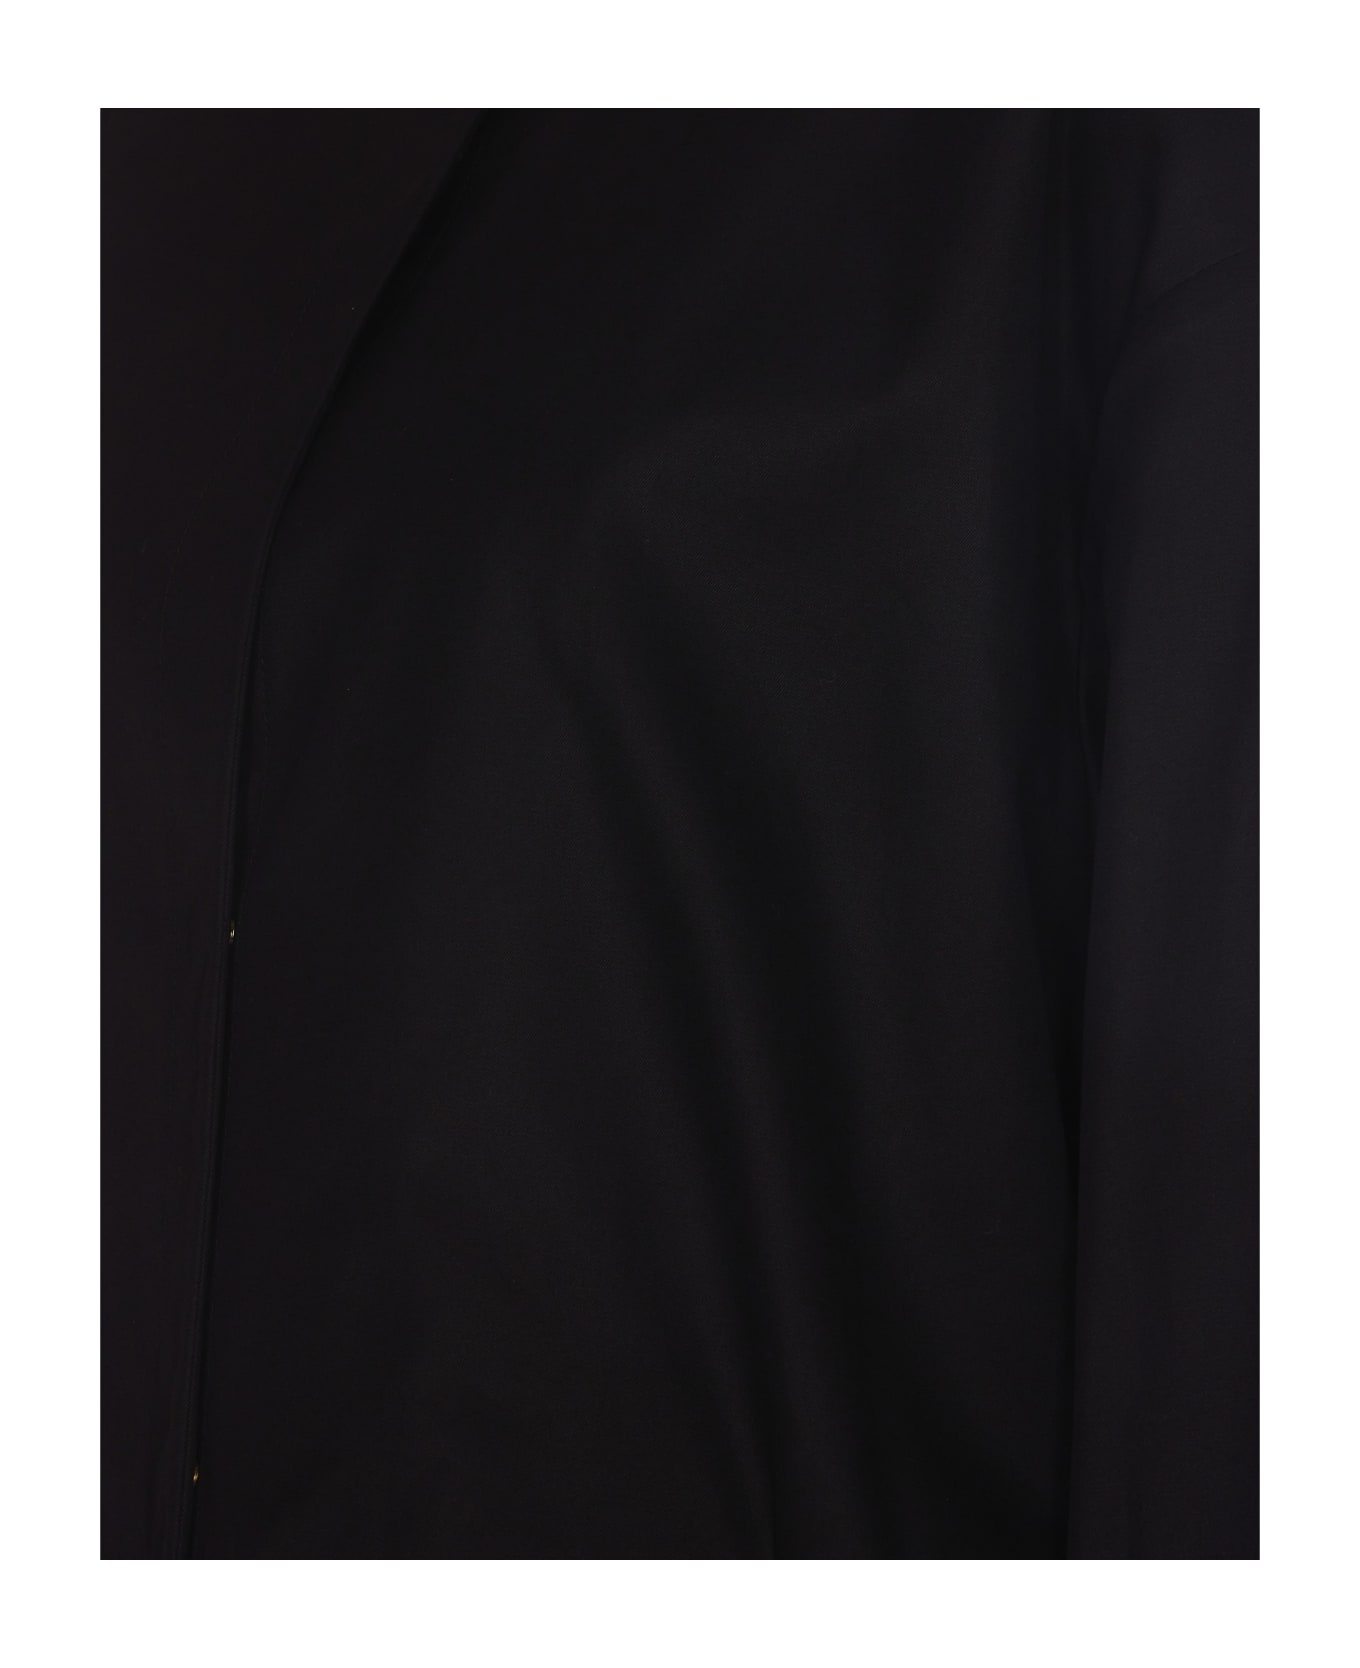 Herno Single Breasted Long Coat - Black コート